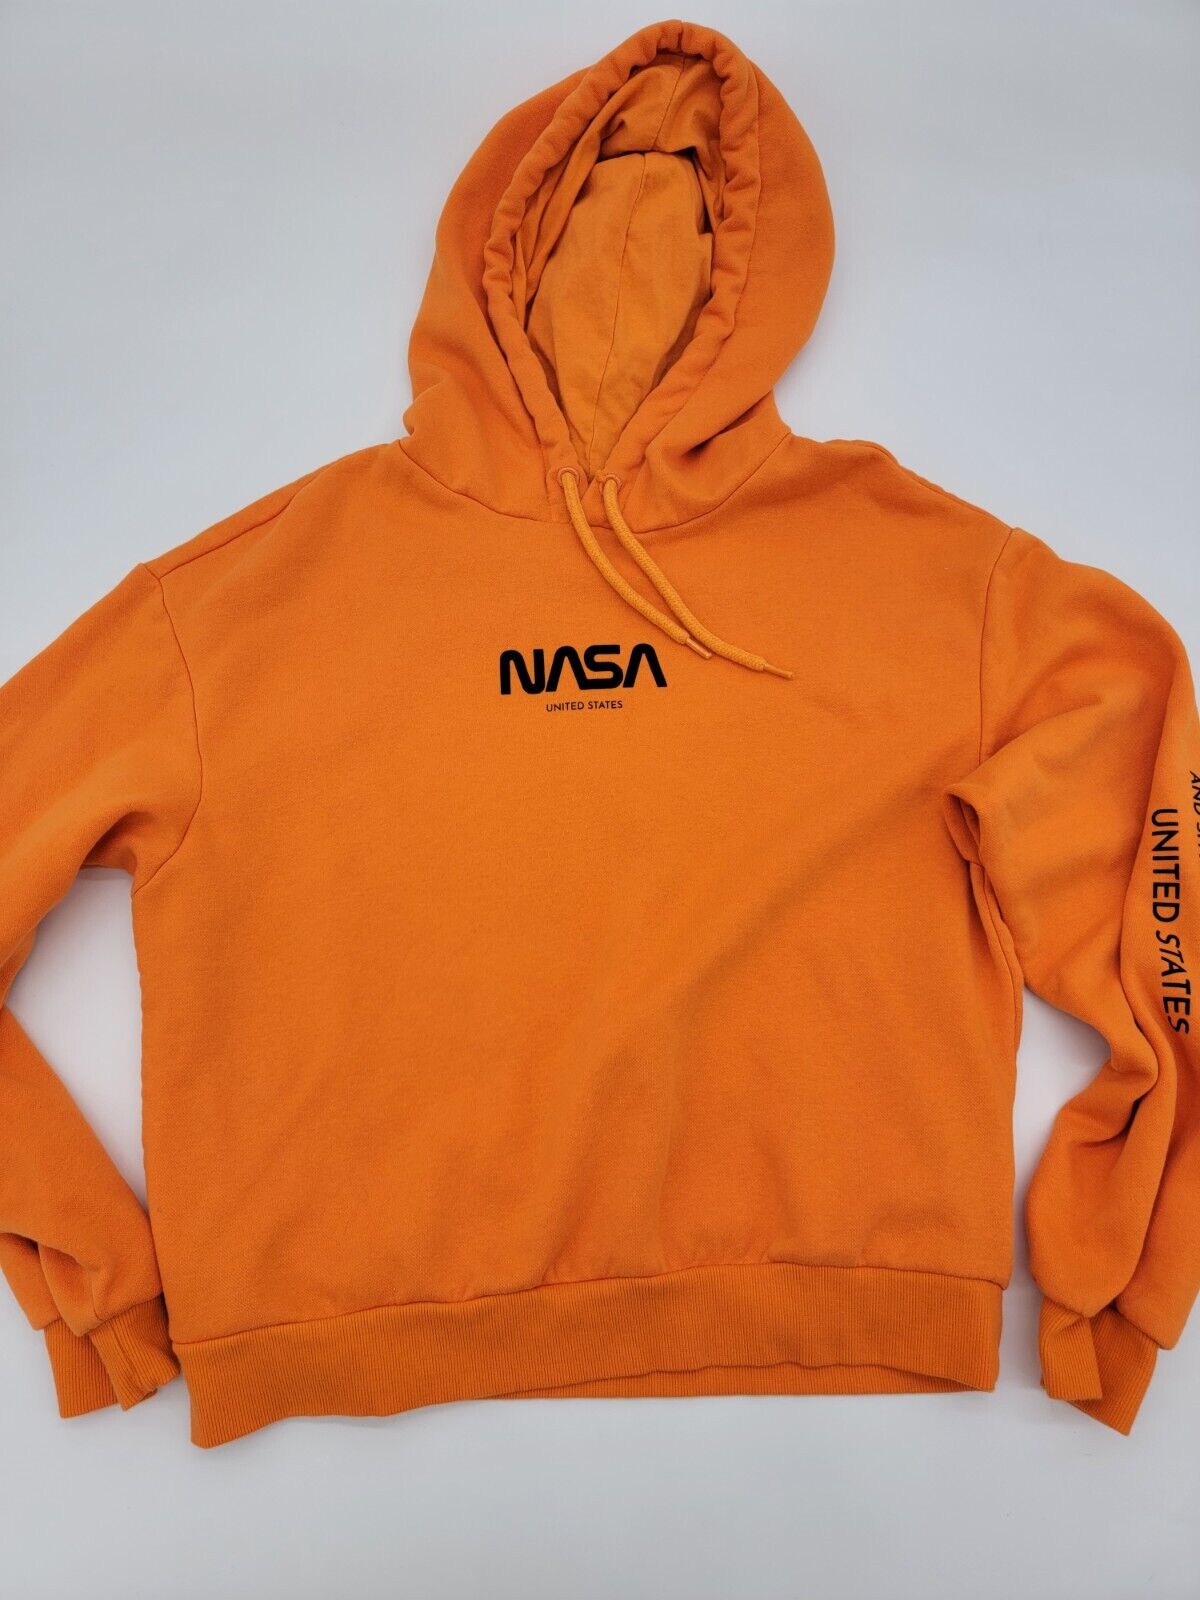 vaak Microbe werkzaamheid NASA Hoodie Women's Size Medium Orange United States H&M Divided Sweatshirt  Soft | eBay